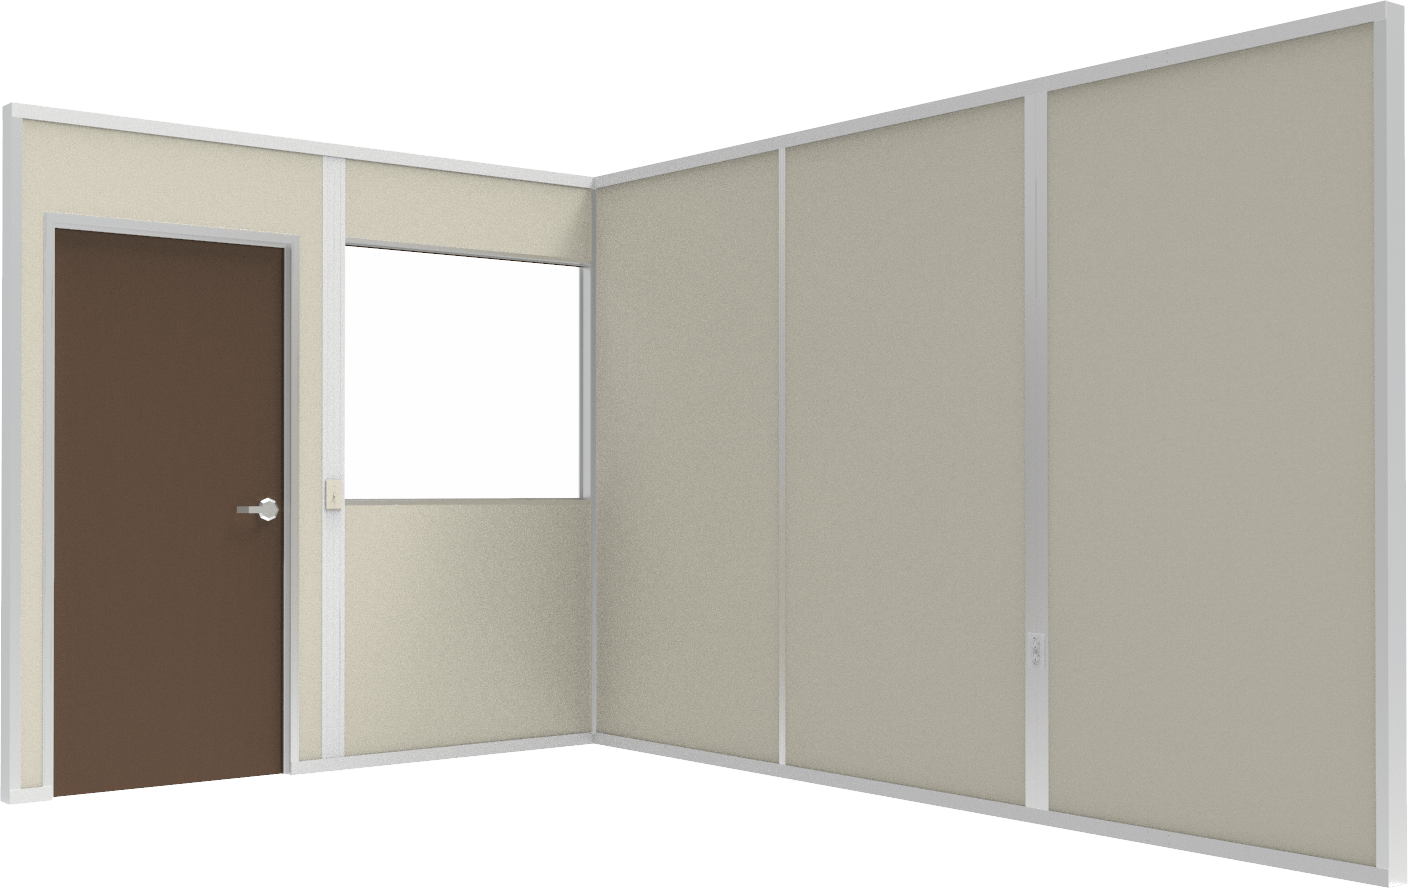 Modular Walls - Movable Walls - Cubicle Walls - Prefabricated Walls